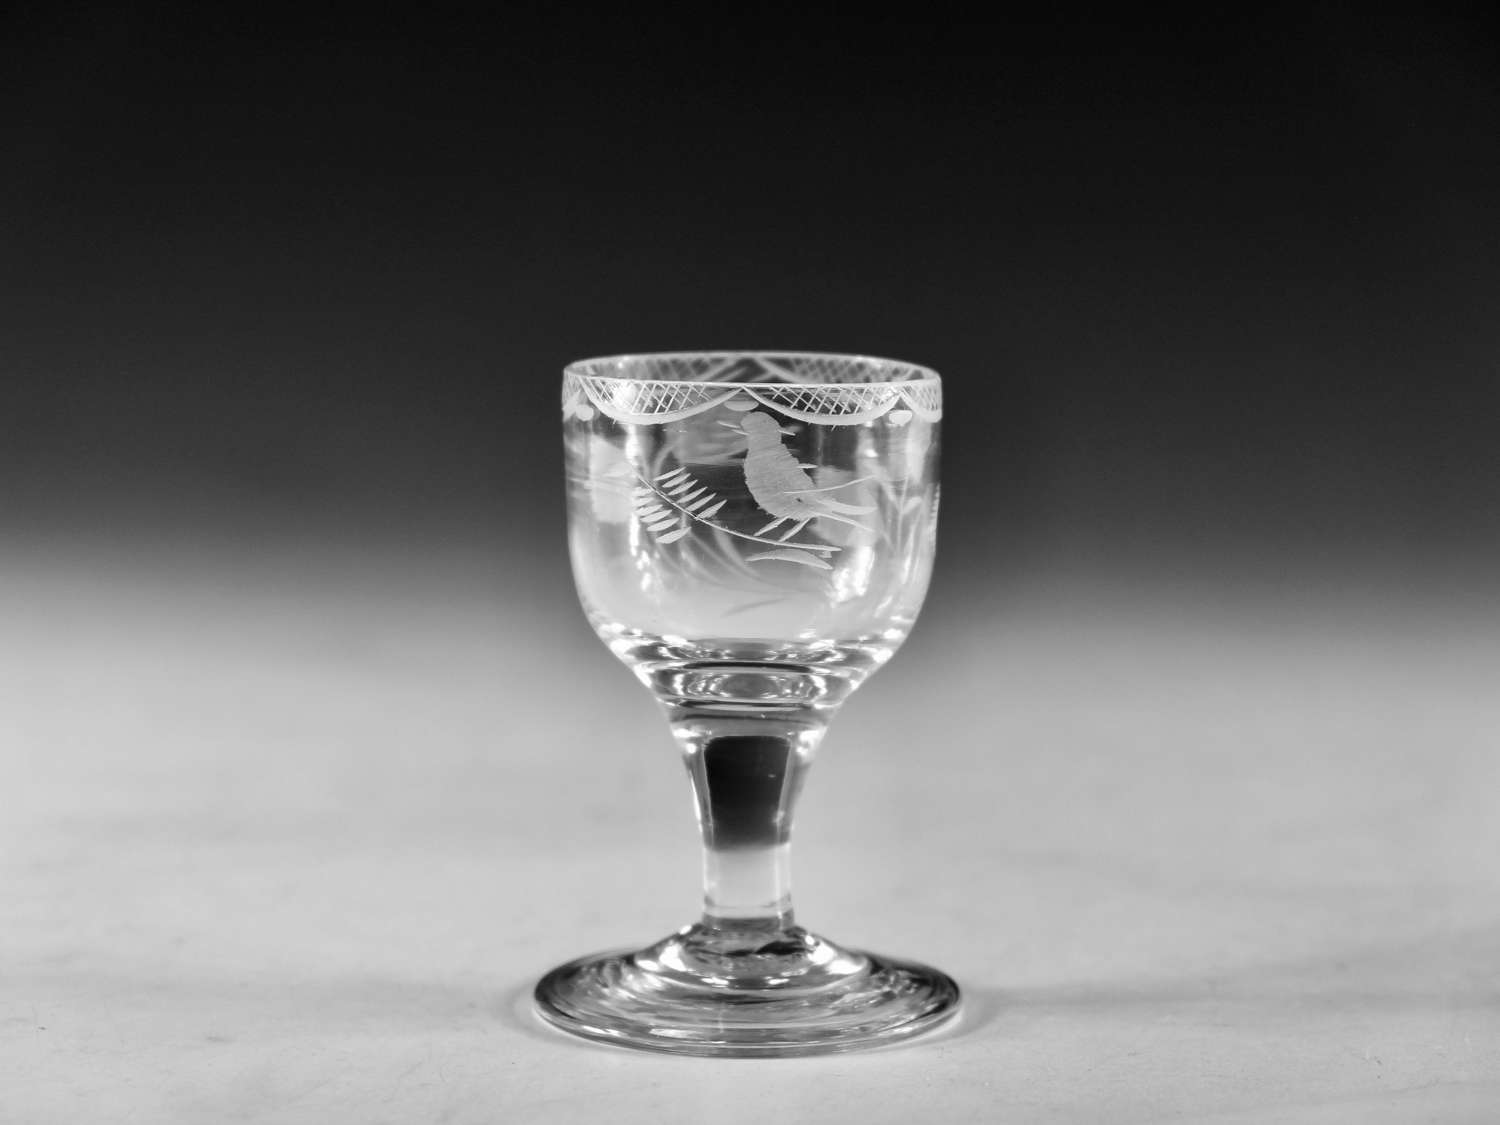 Antique glass - engraved dram glass English c1800